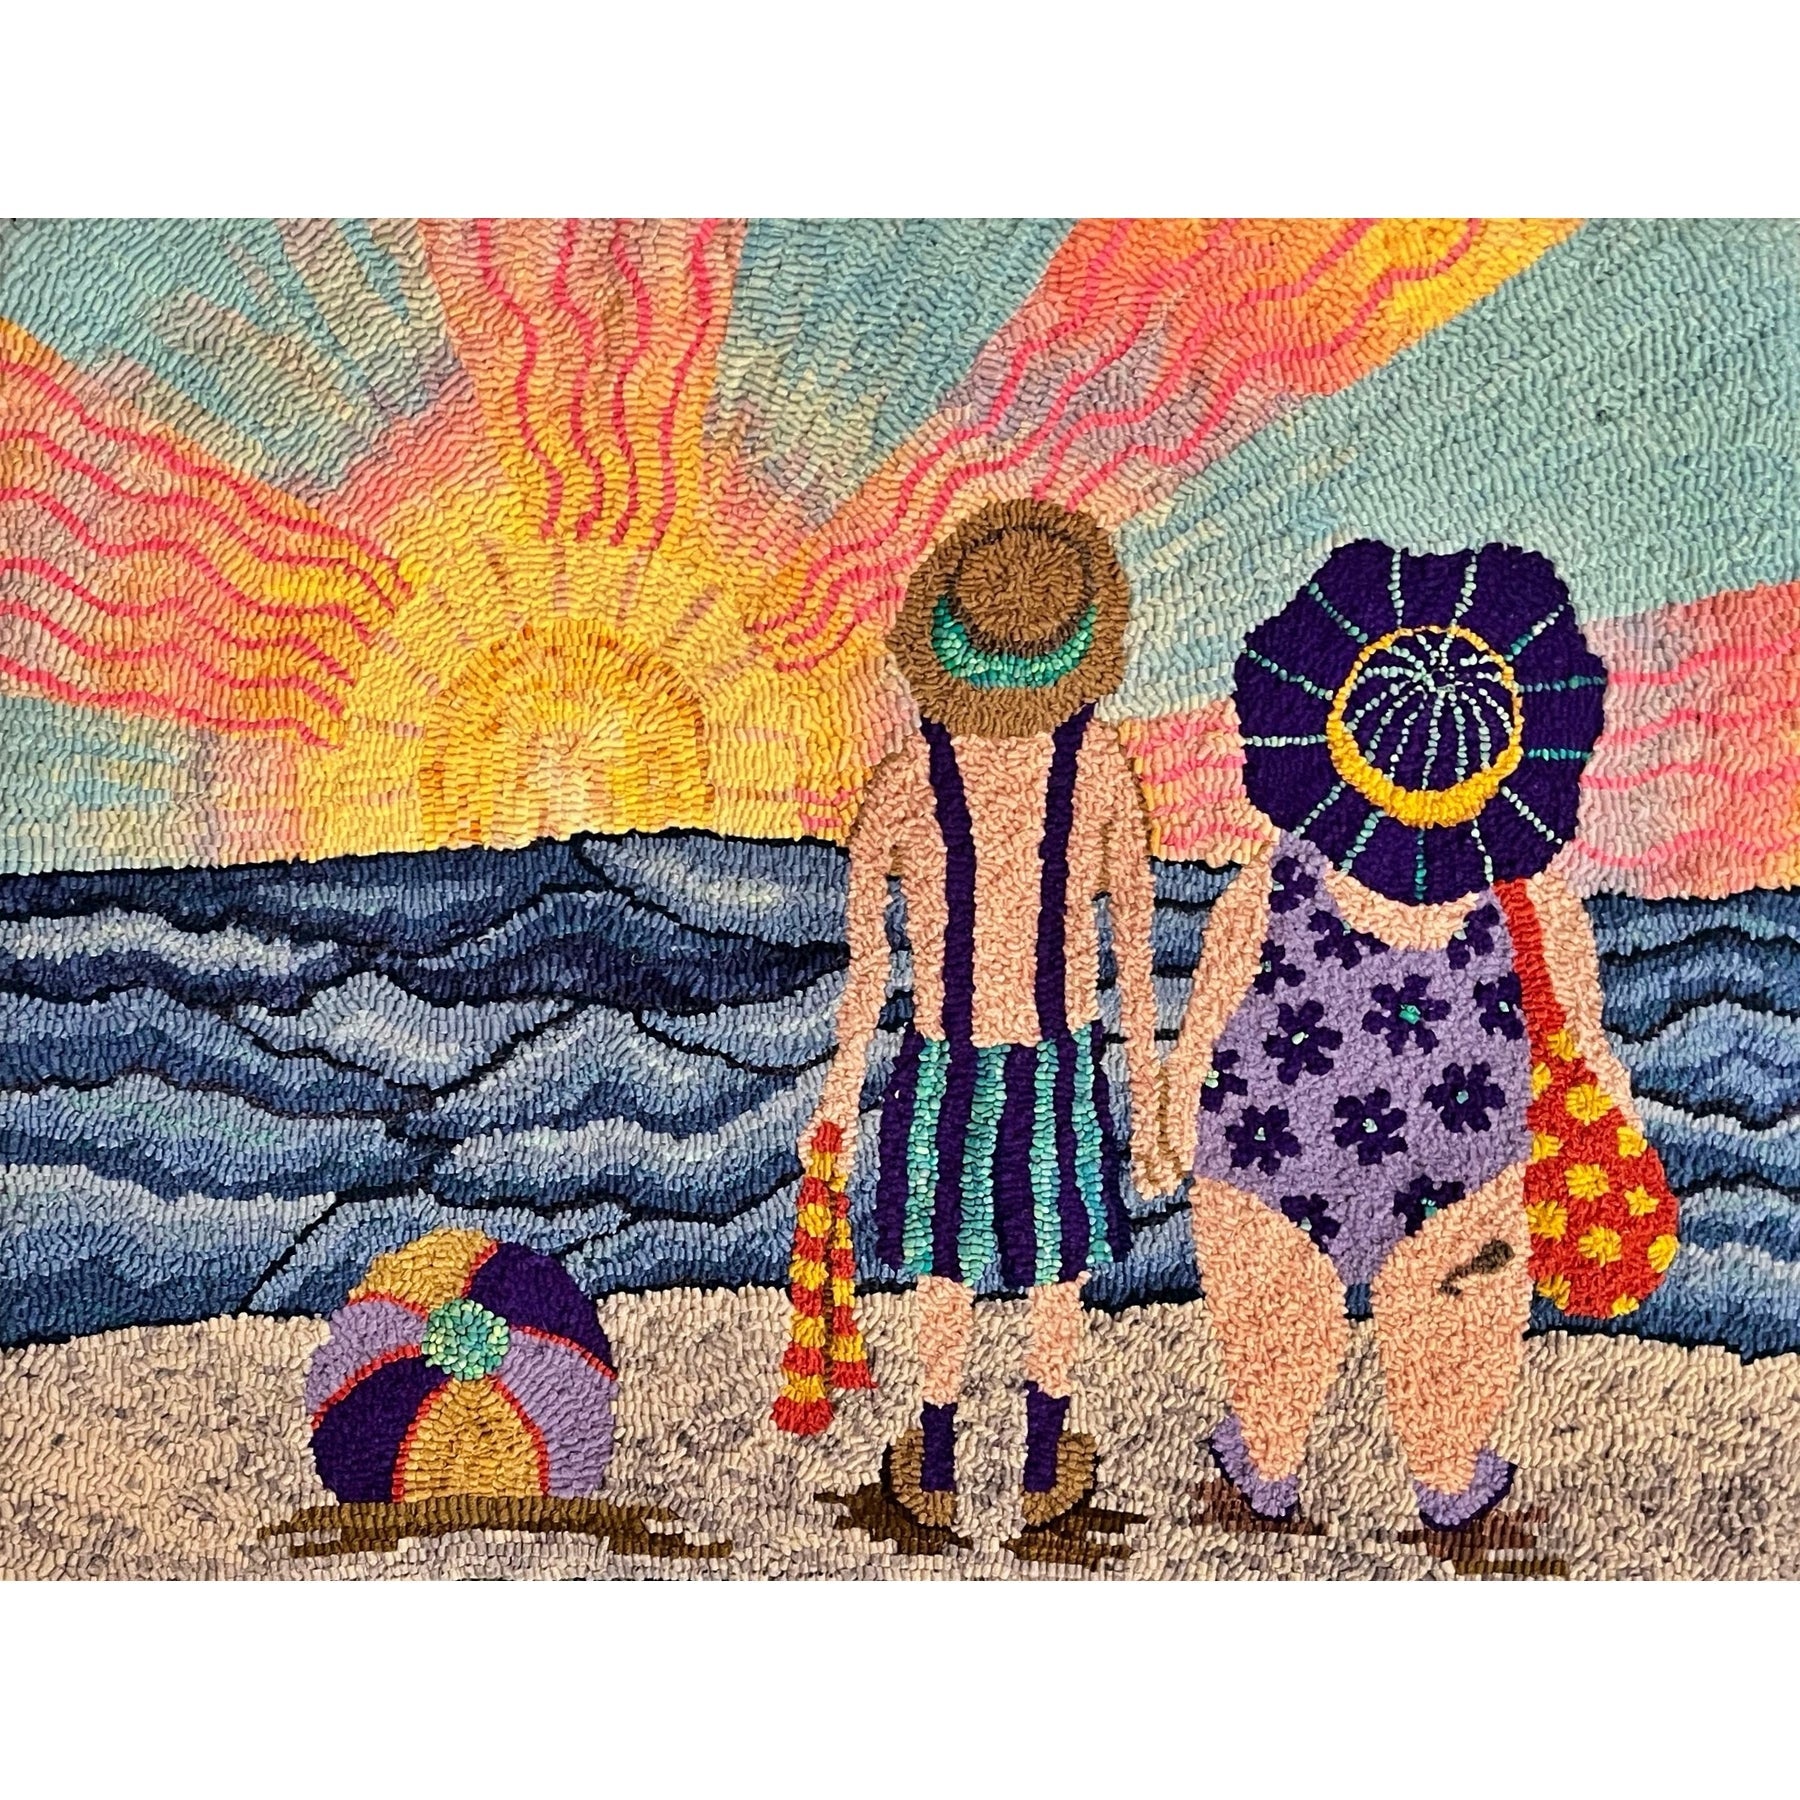 Sunset Moment, rug hooked by Joyce Kruger